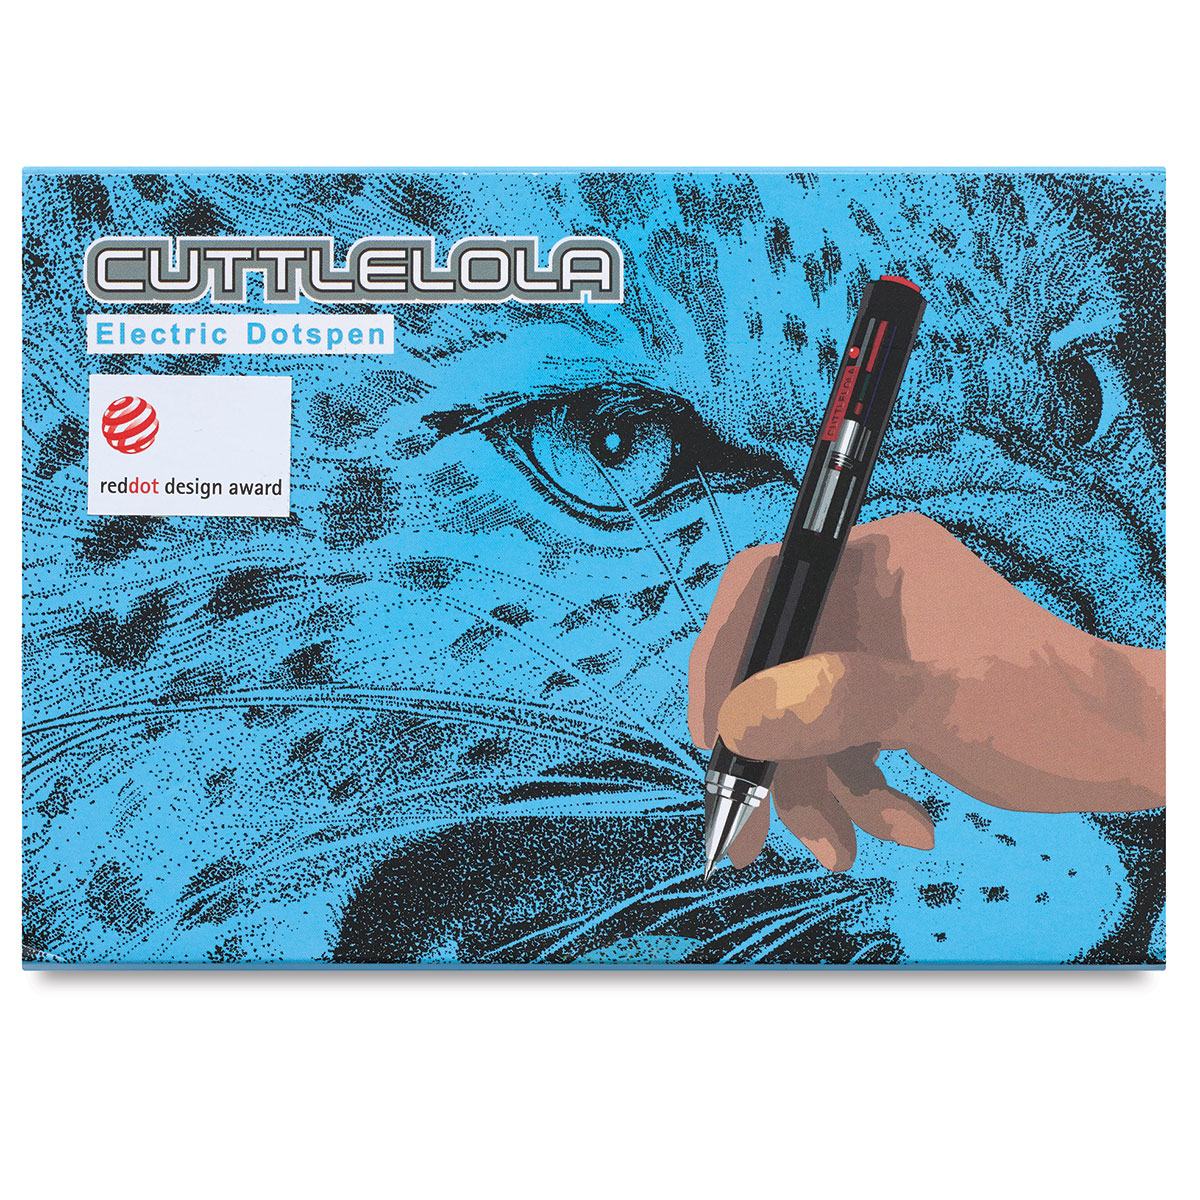 Cuttlelola Electric Dotspen II - The Black Knight, Rechargeable Pen for Artists, hobbist, tatooist, managa, Sketching, Stippl